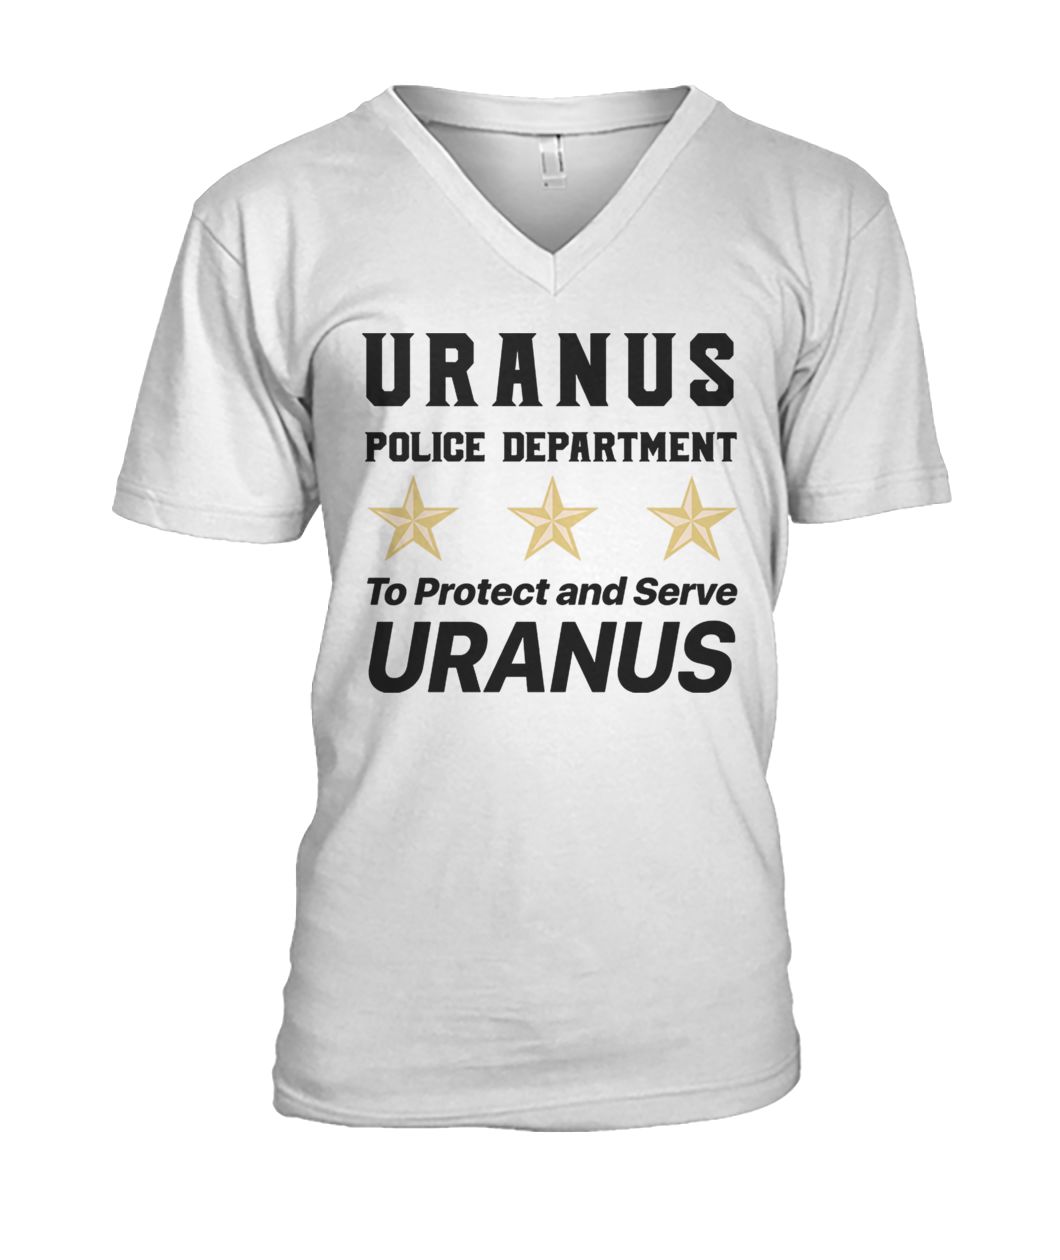 Uranus police department to protect and serve uranus mens v-neck